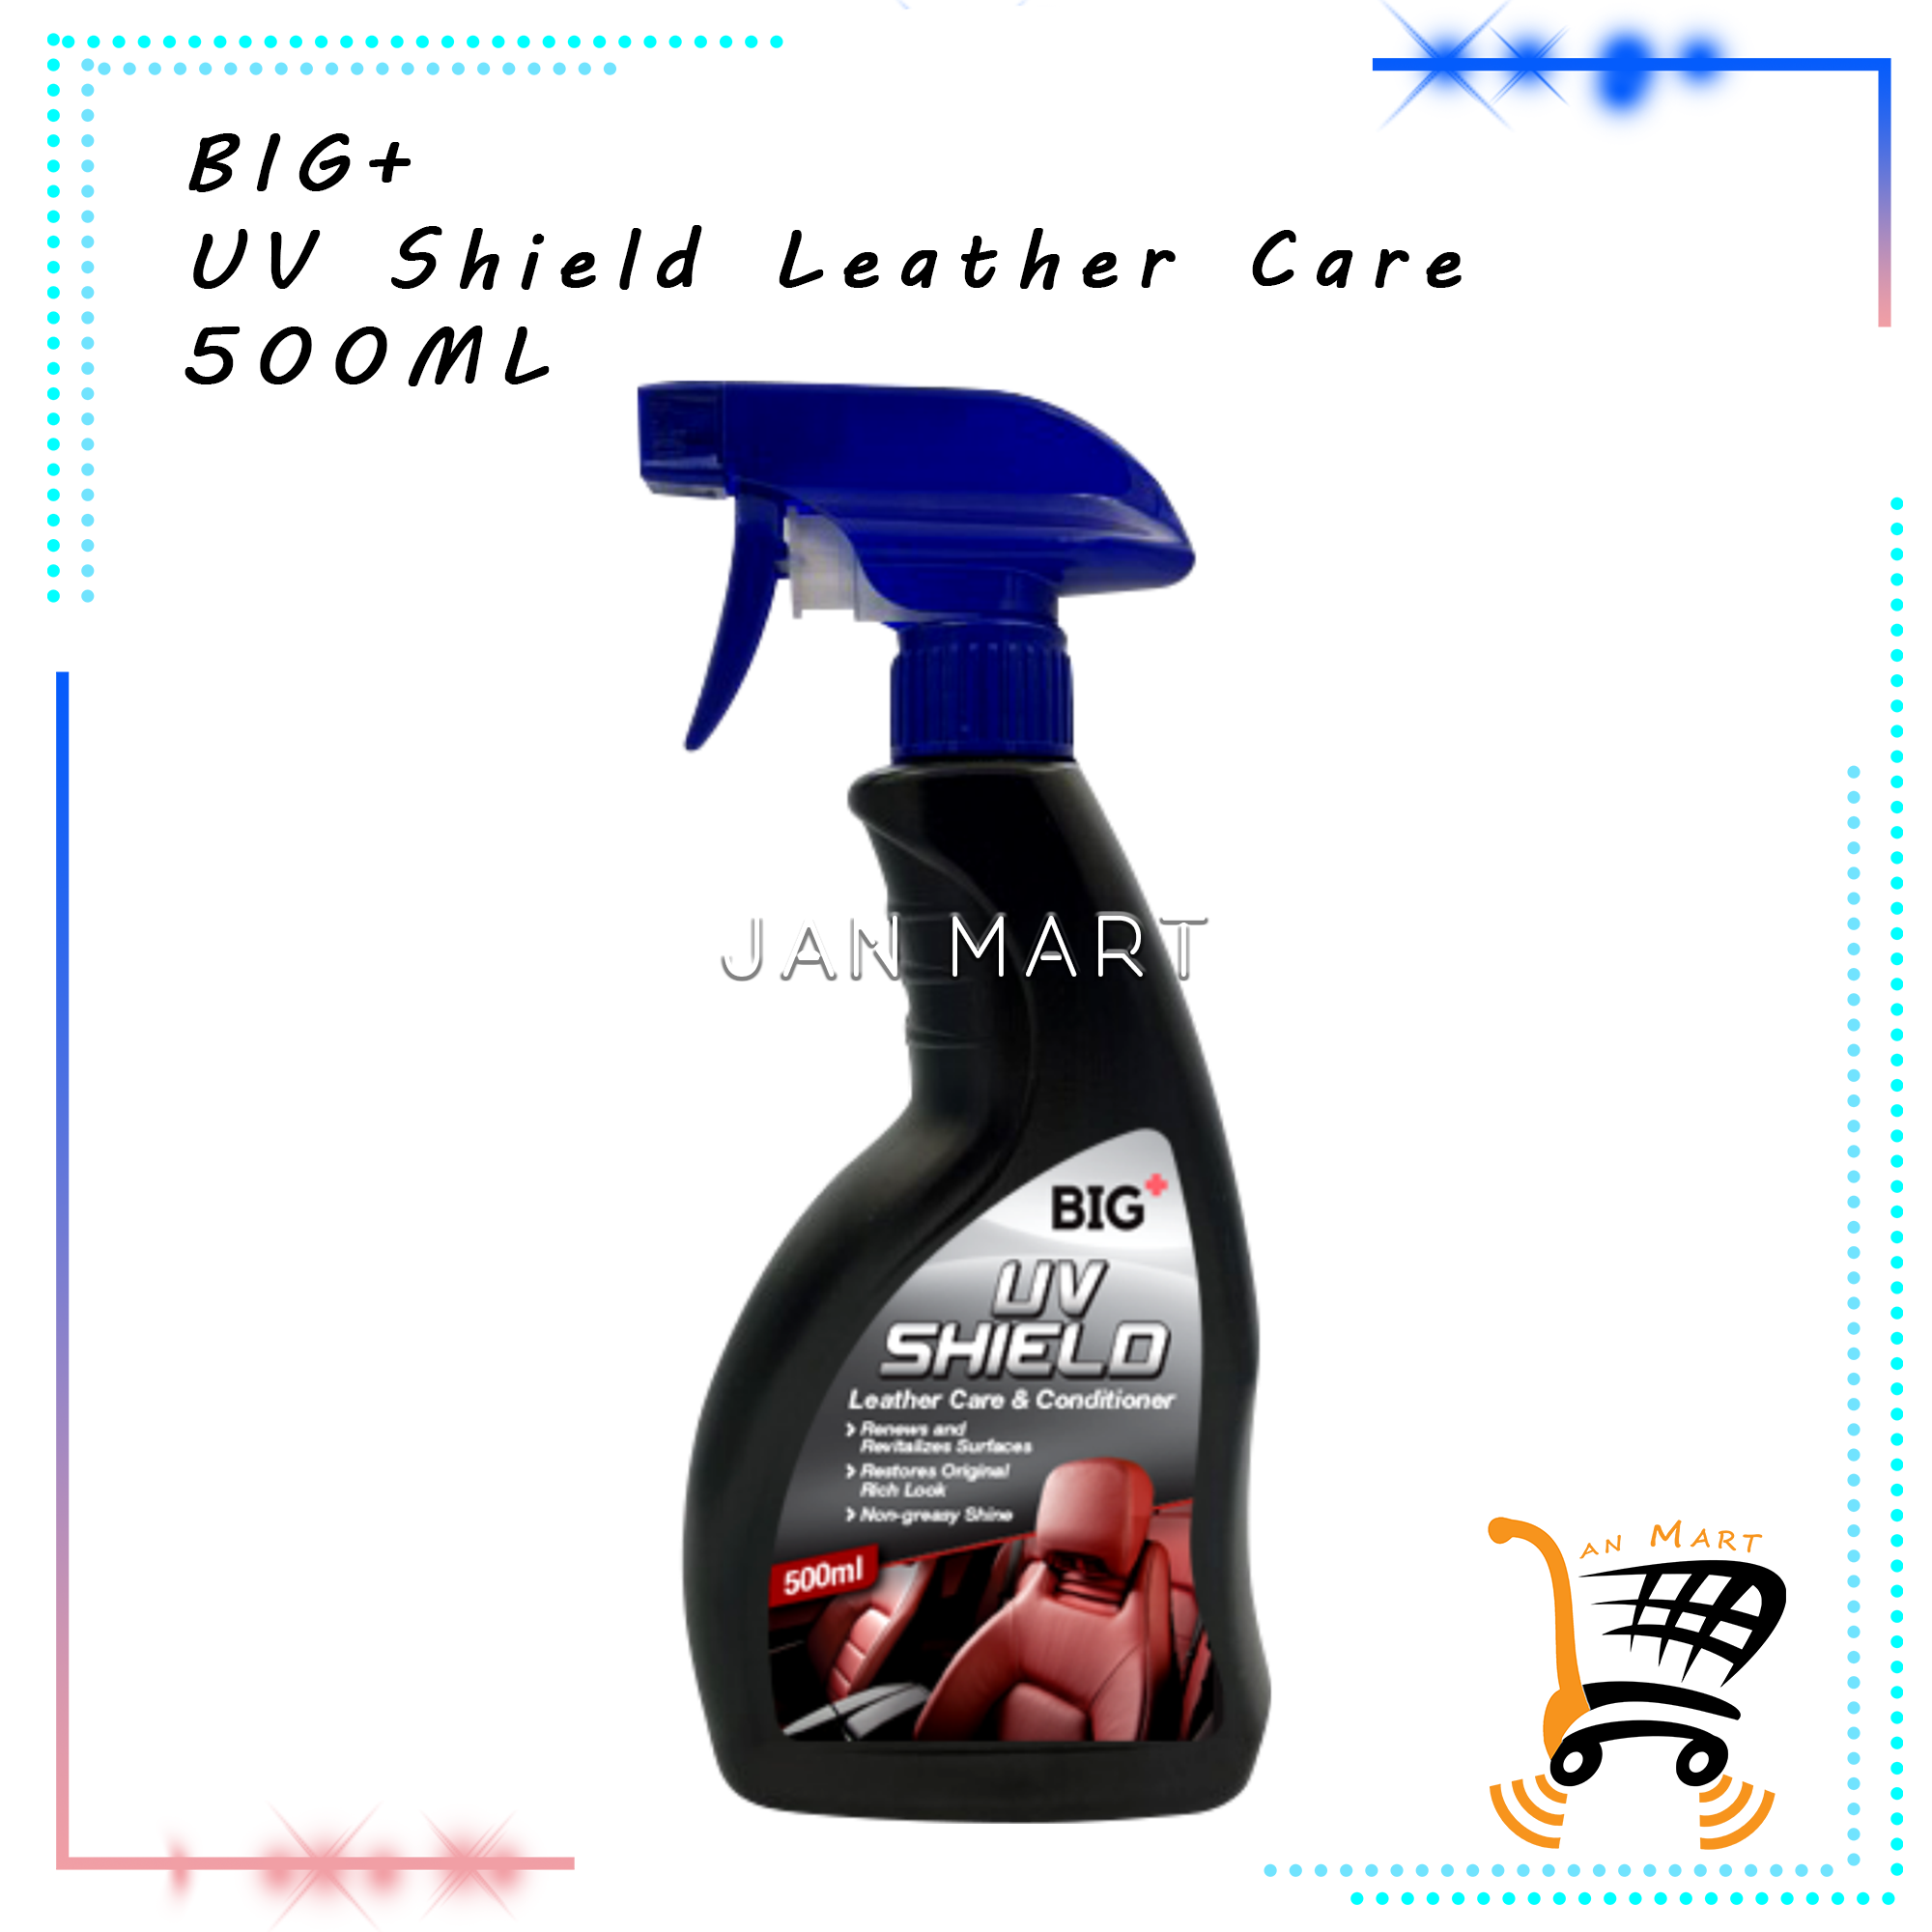 BIG+ UV Shield Leather Care 500ML